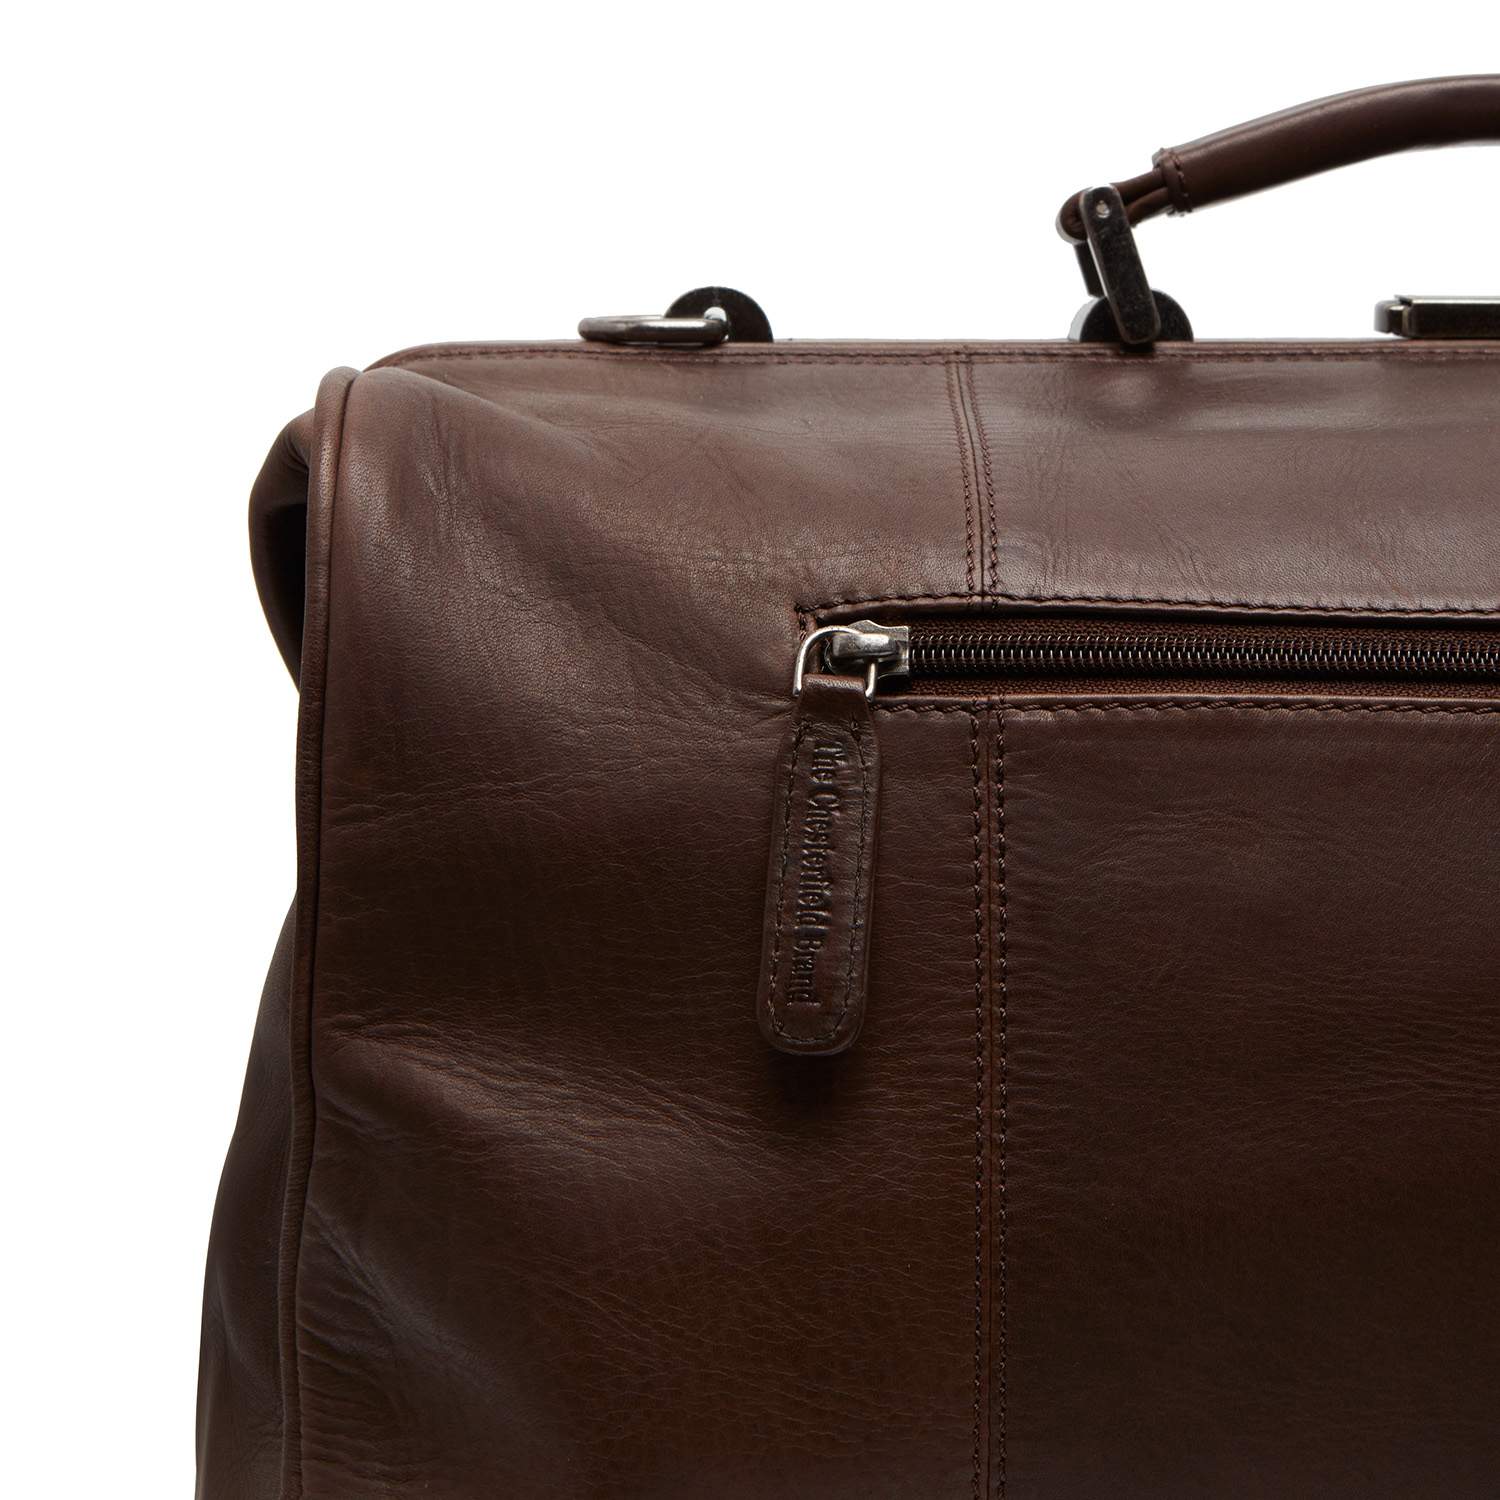 Travelbag "Texel" brown